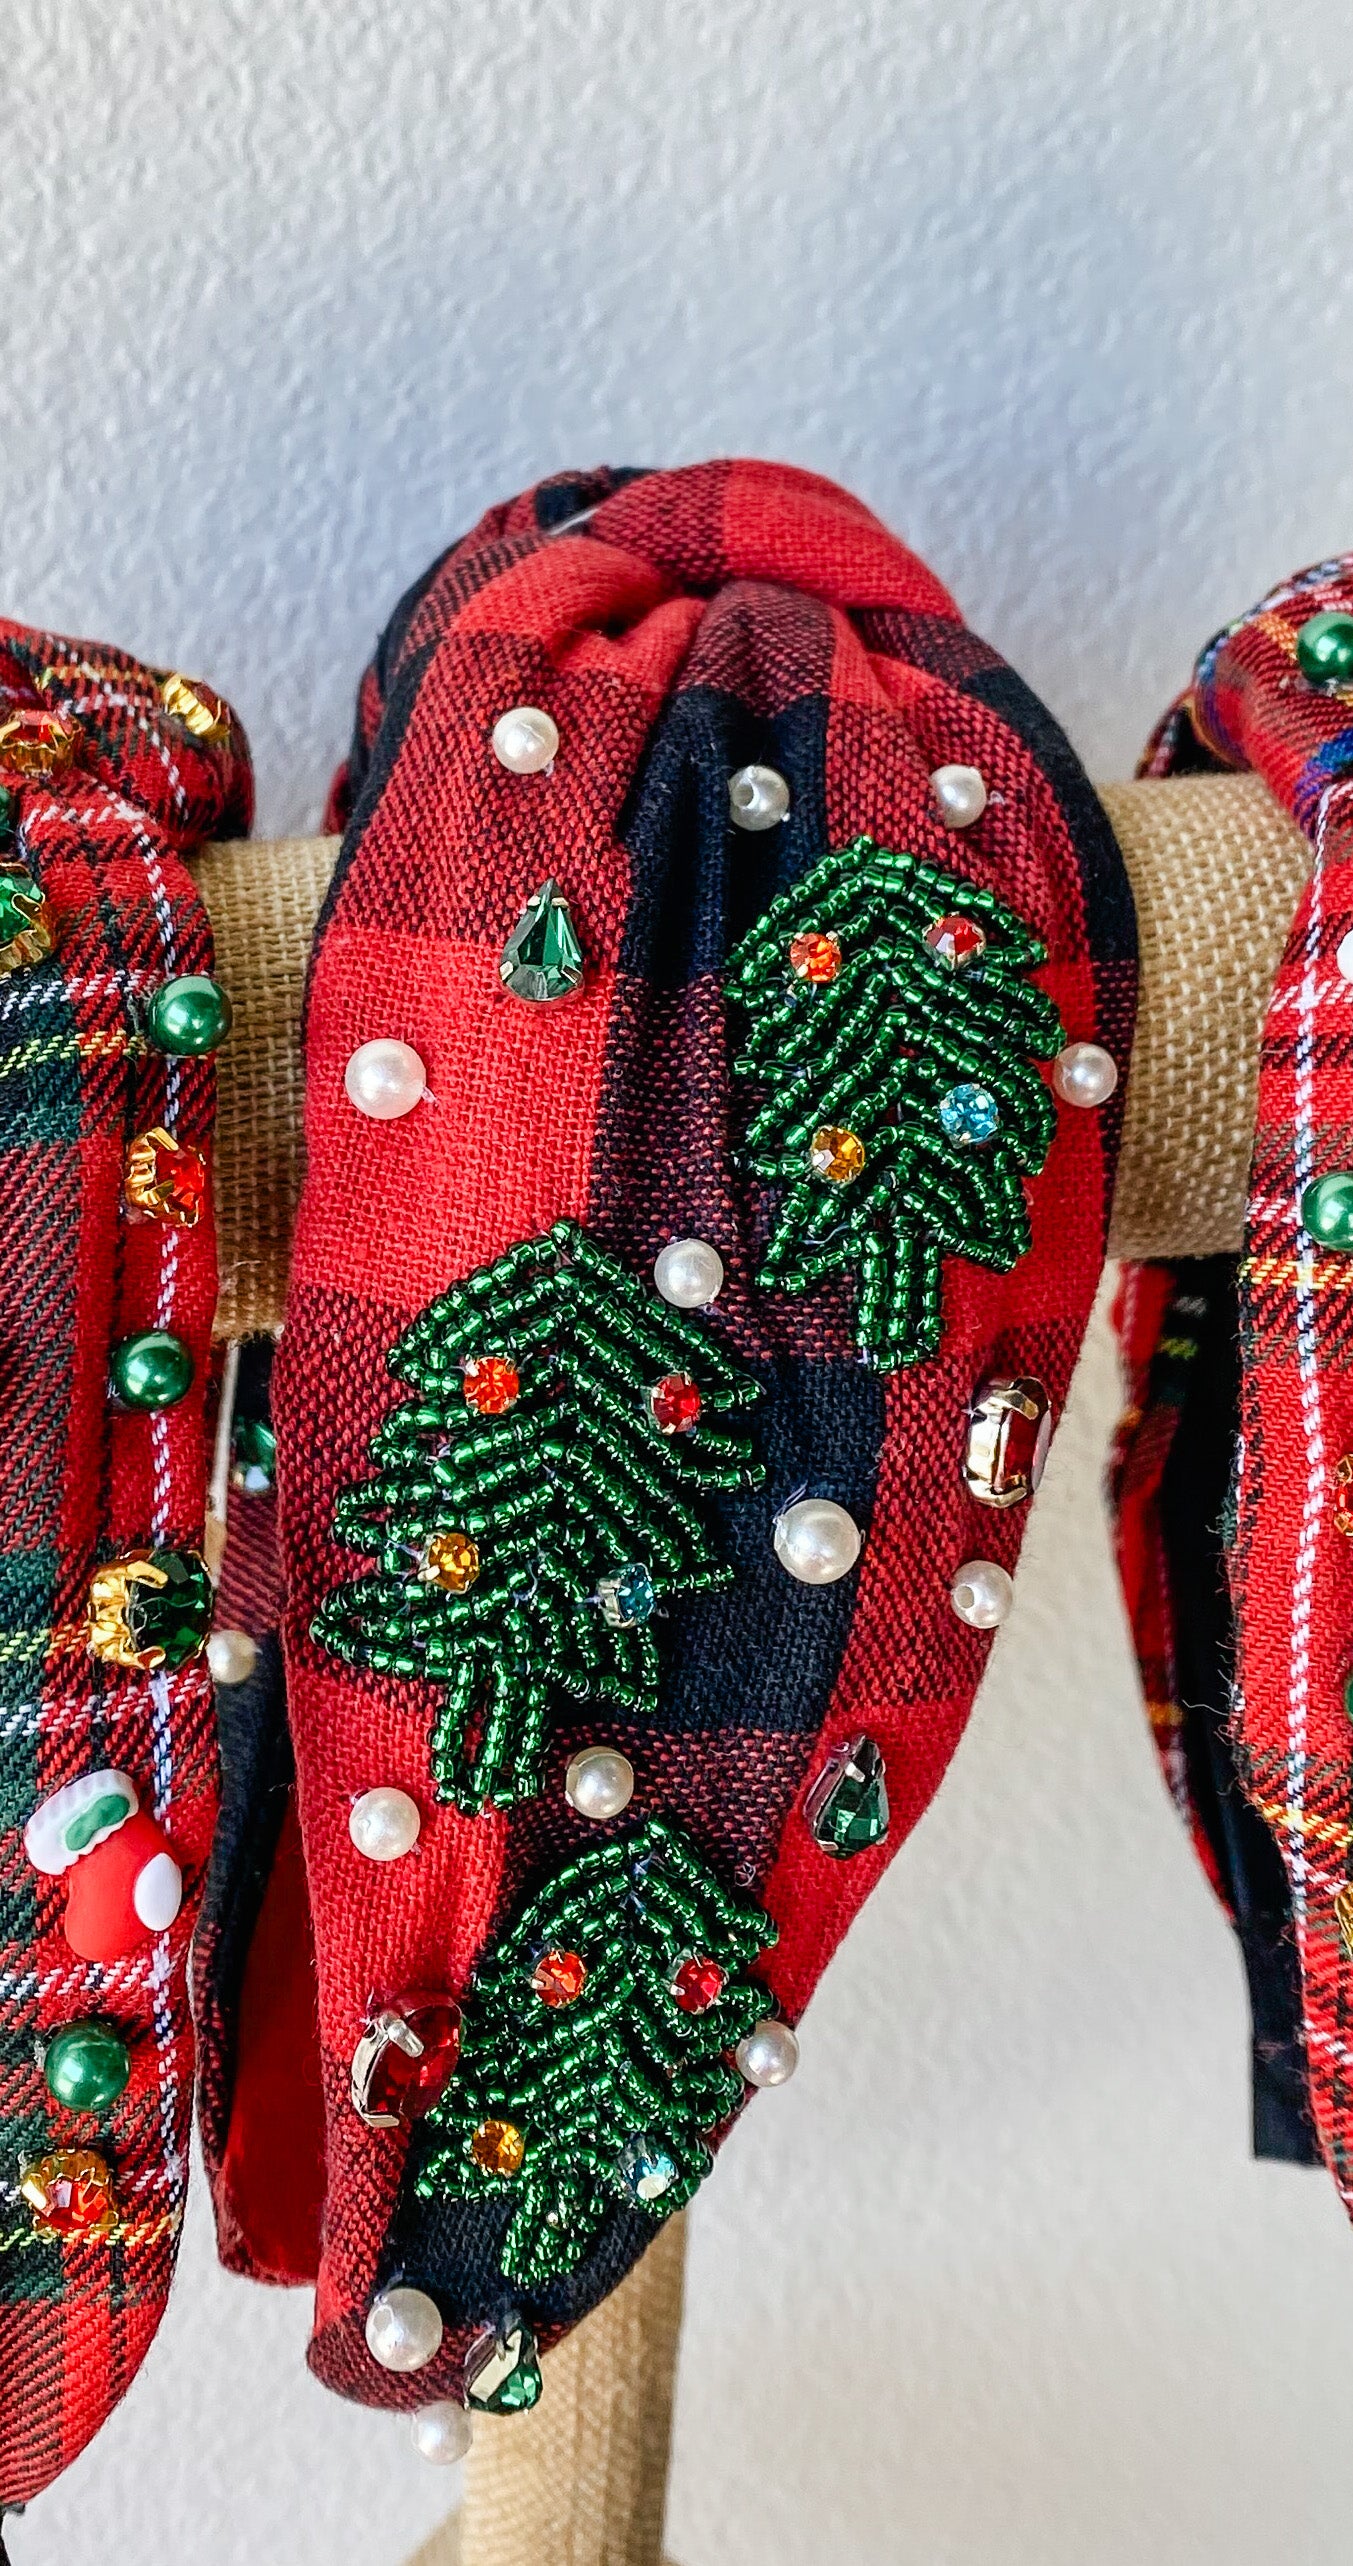 Christmas Tree Headband